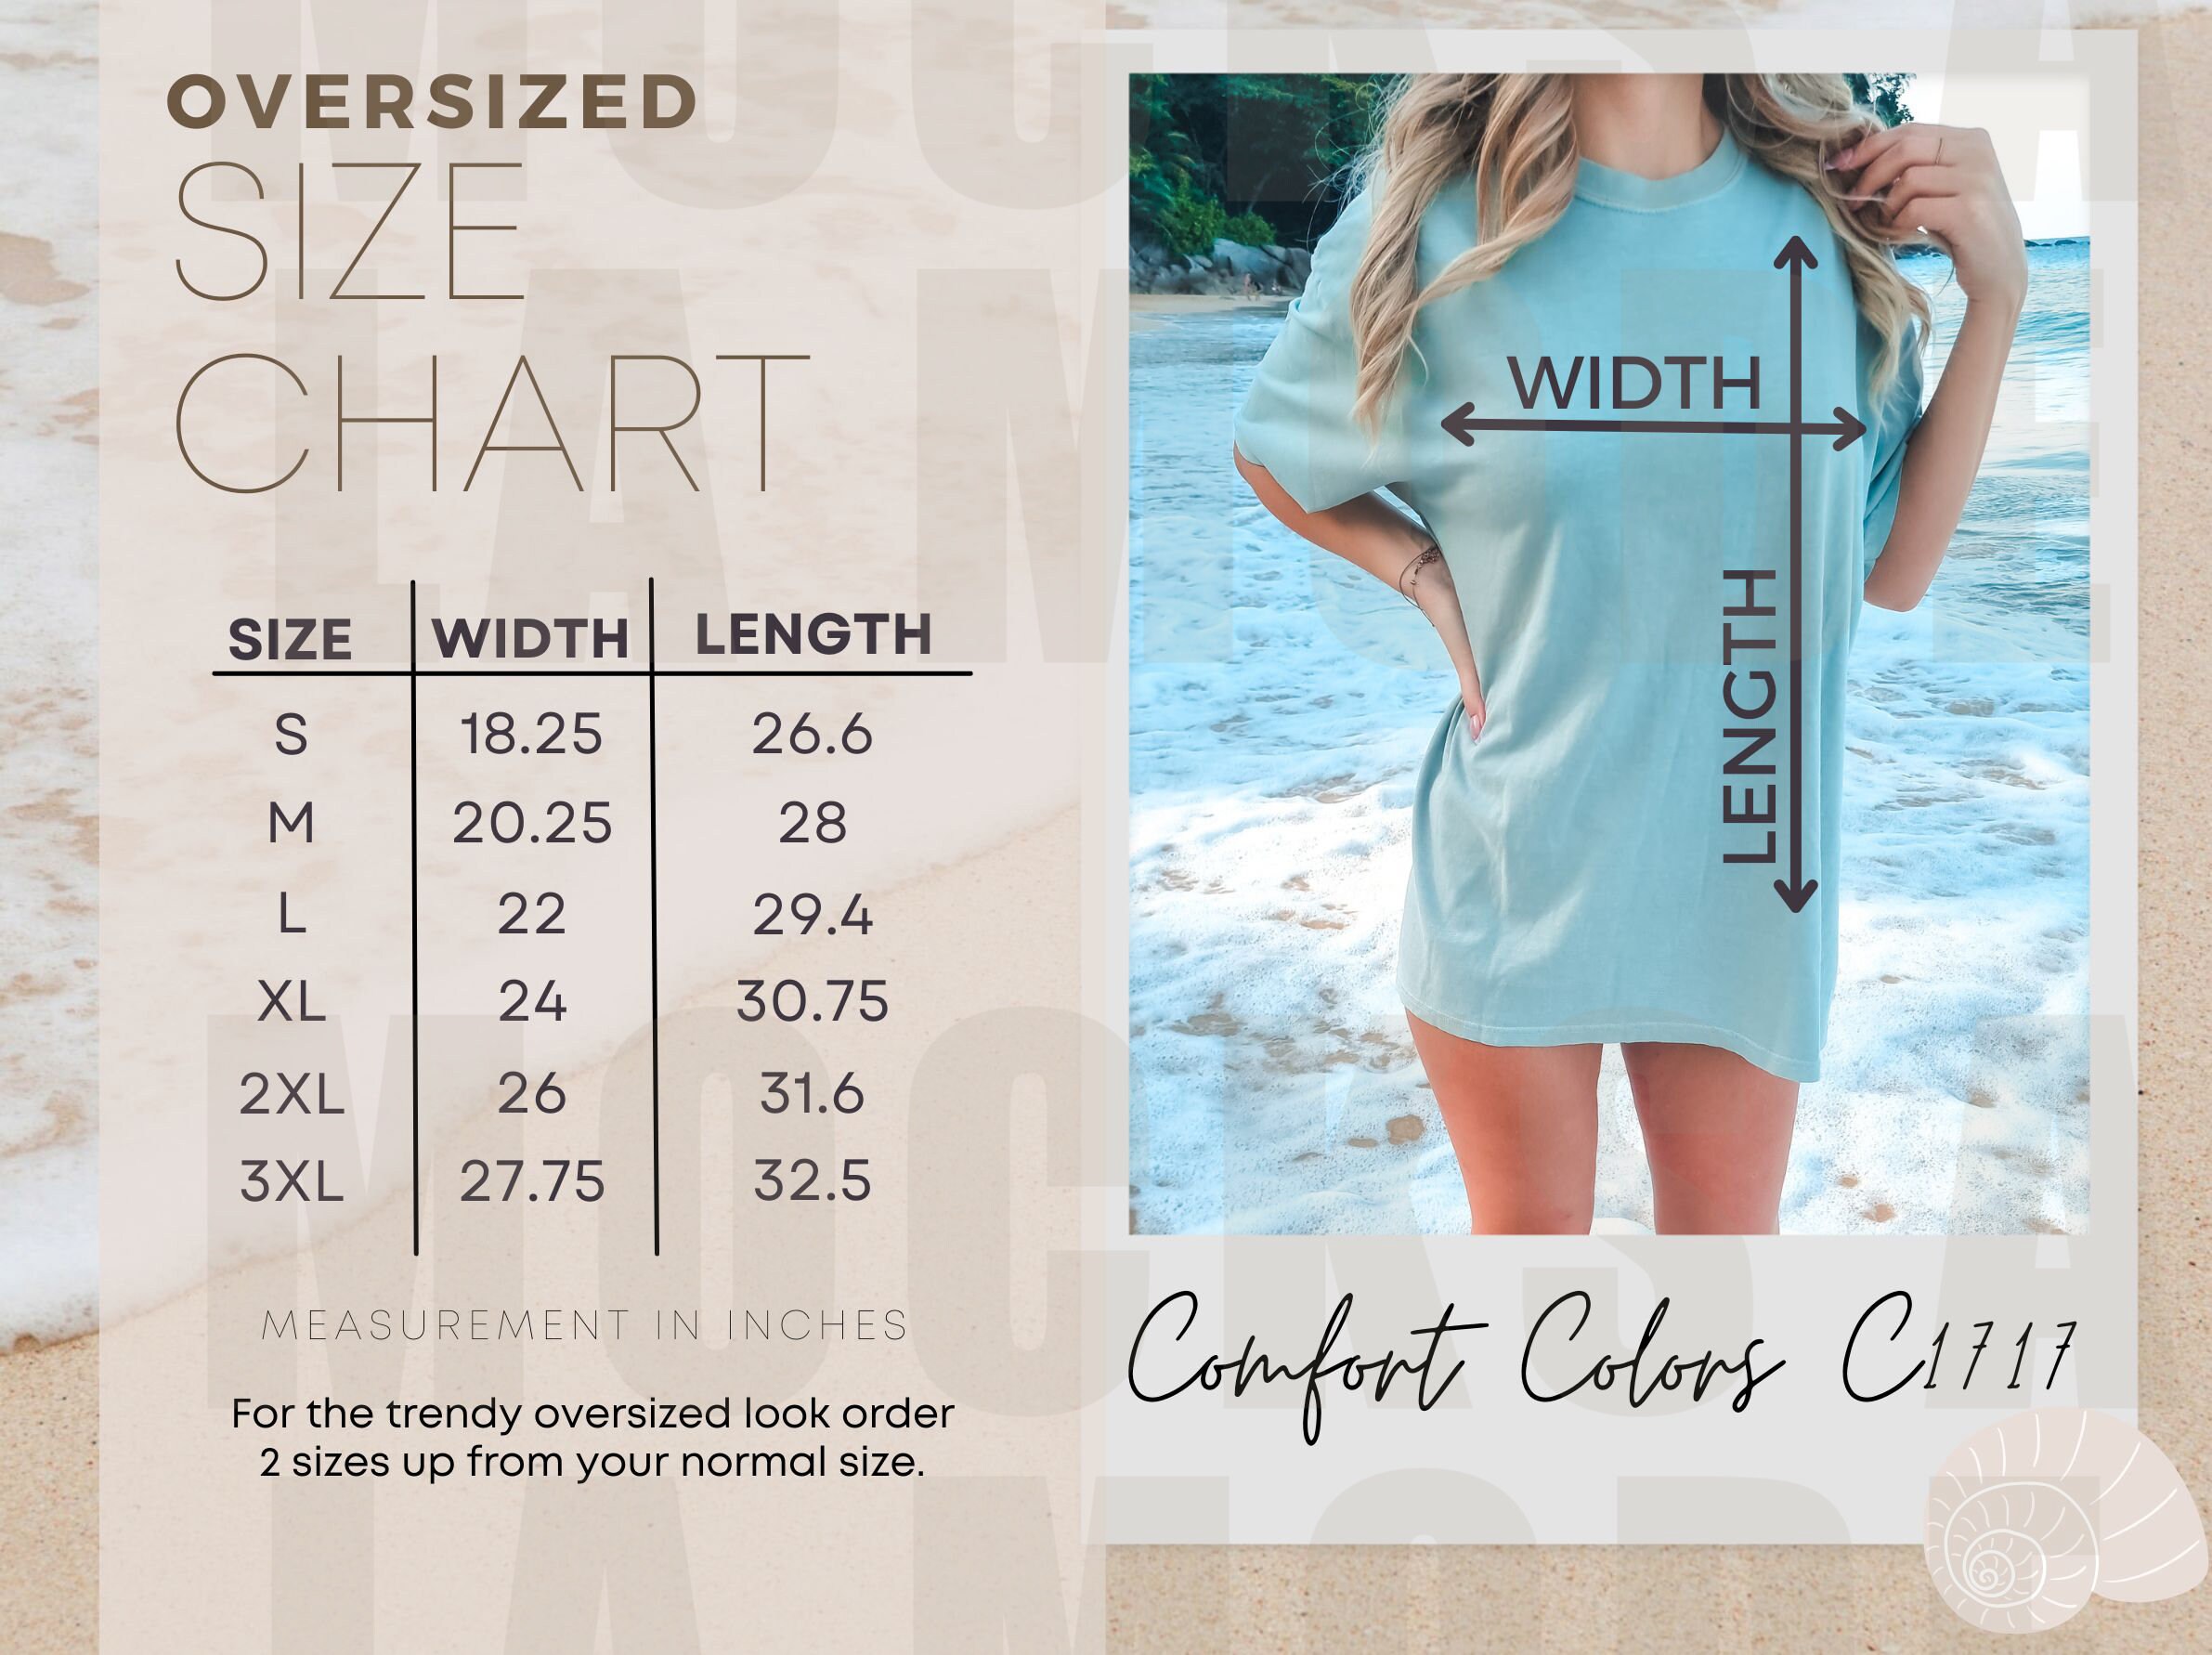 Comfort Colors C1717 Shirt Size Chart Unisex Tshirt Size Chart Model ...